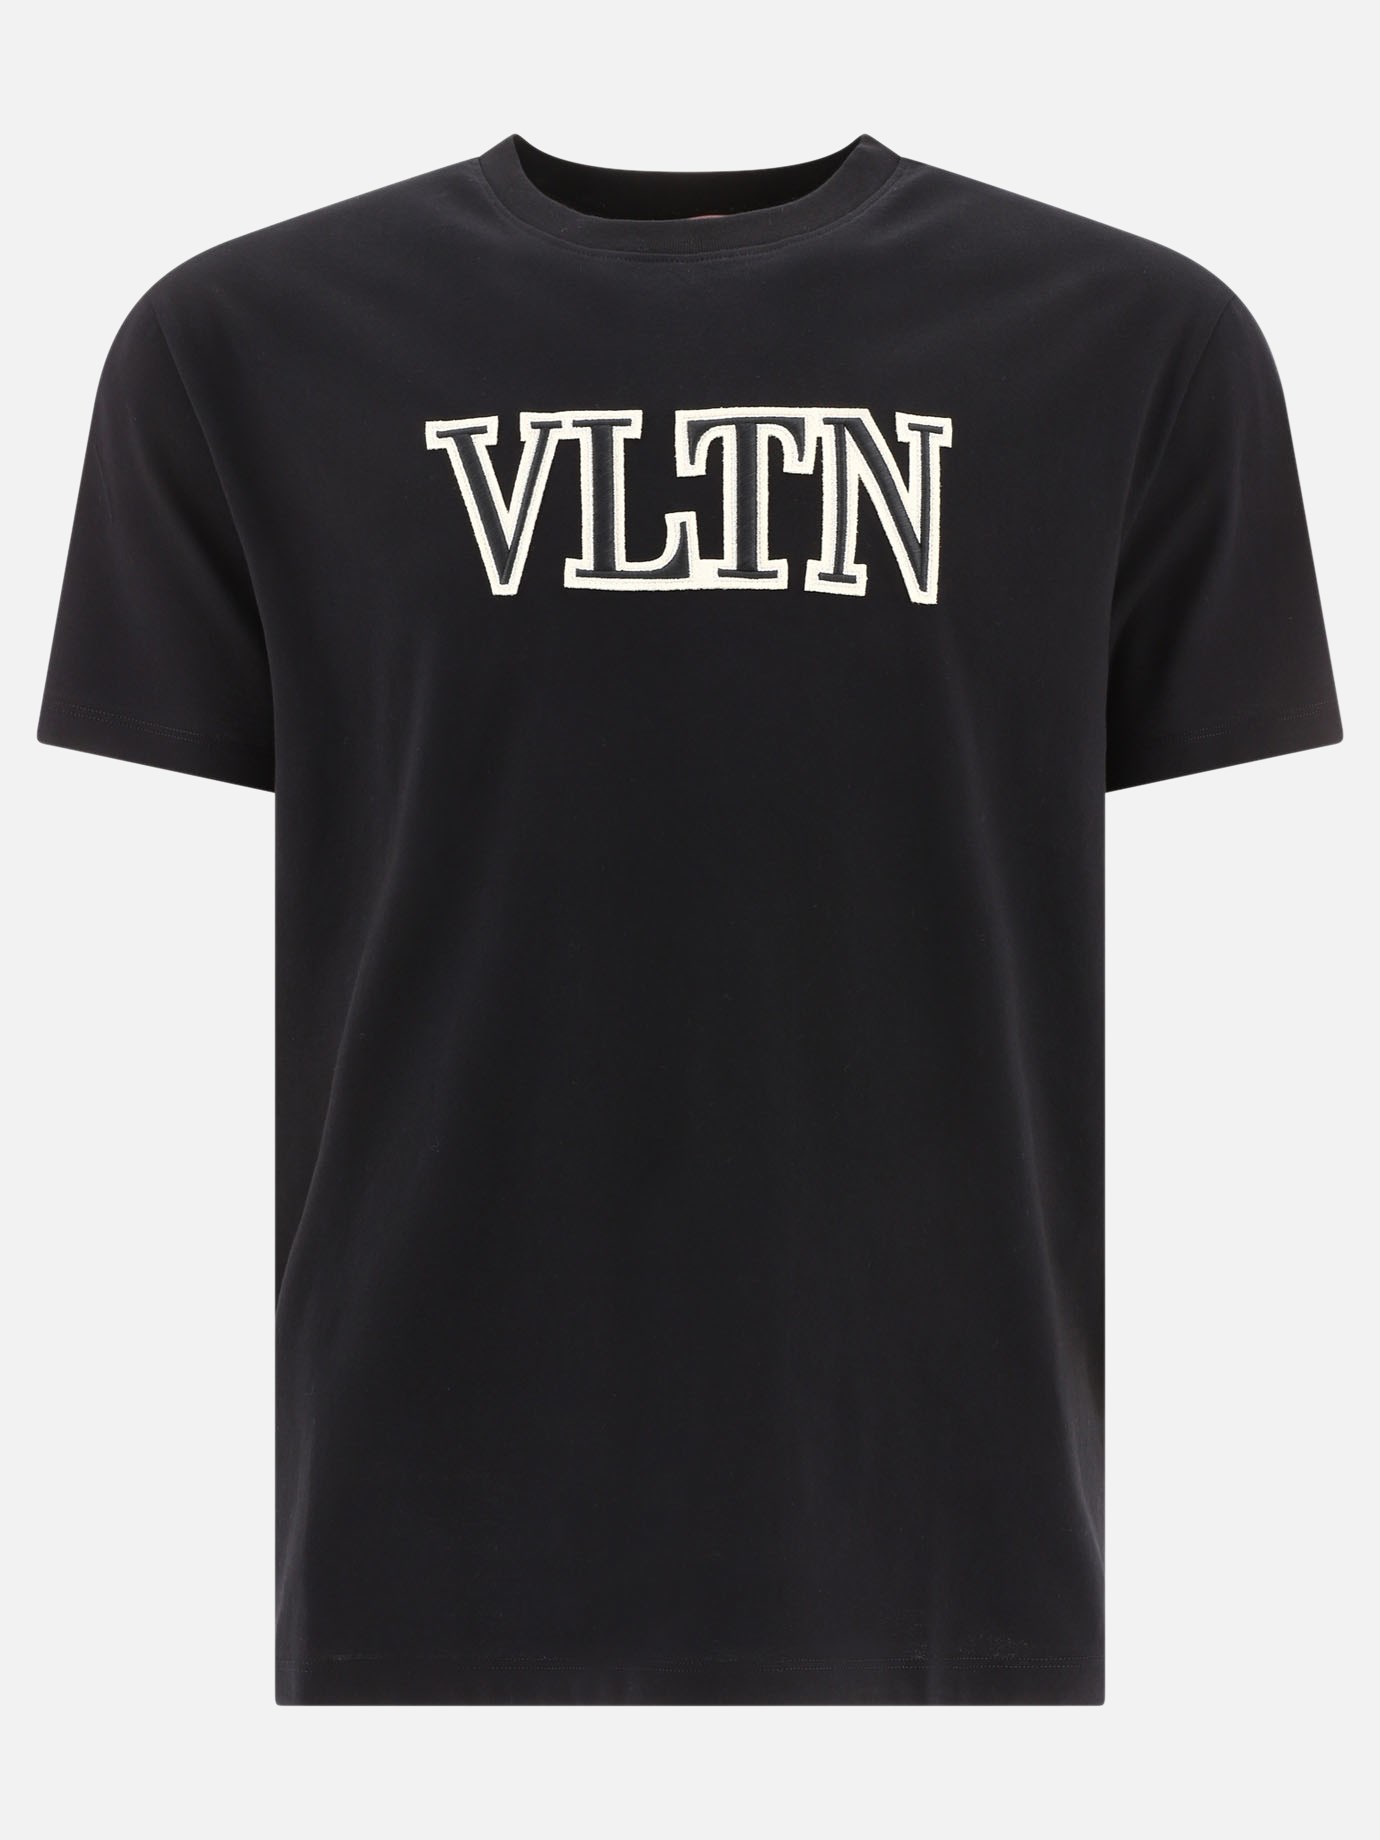  VLTN  t-shirtby Valentino - 0